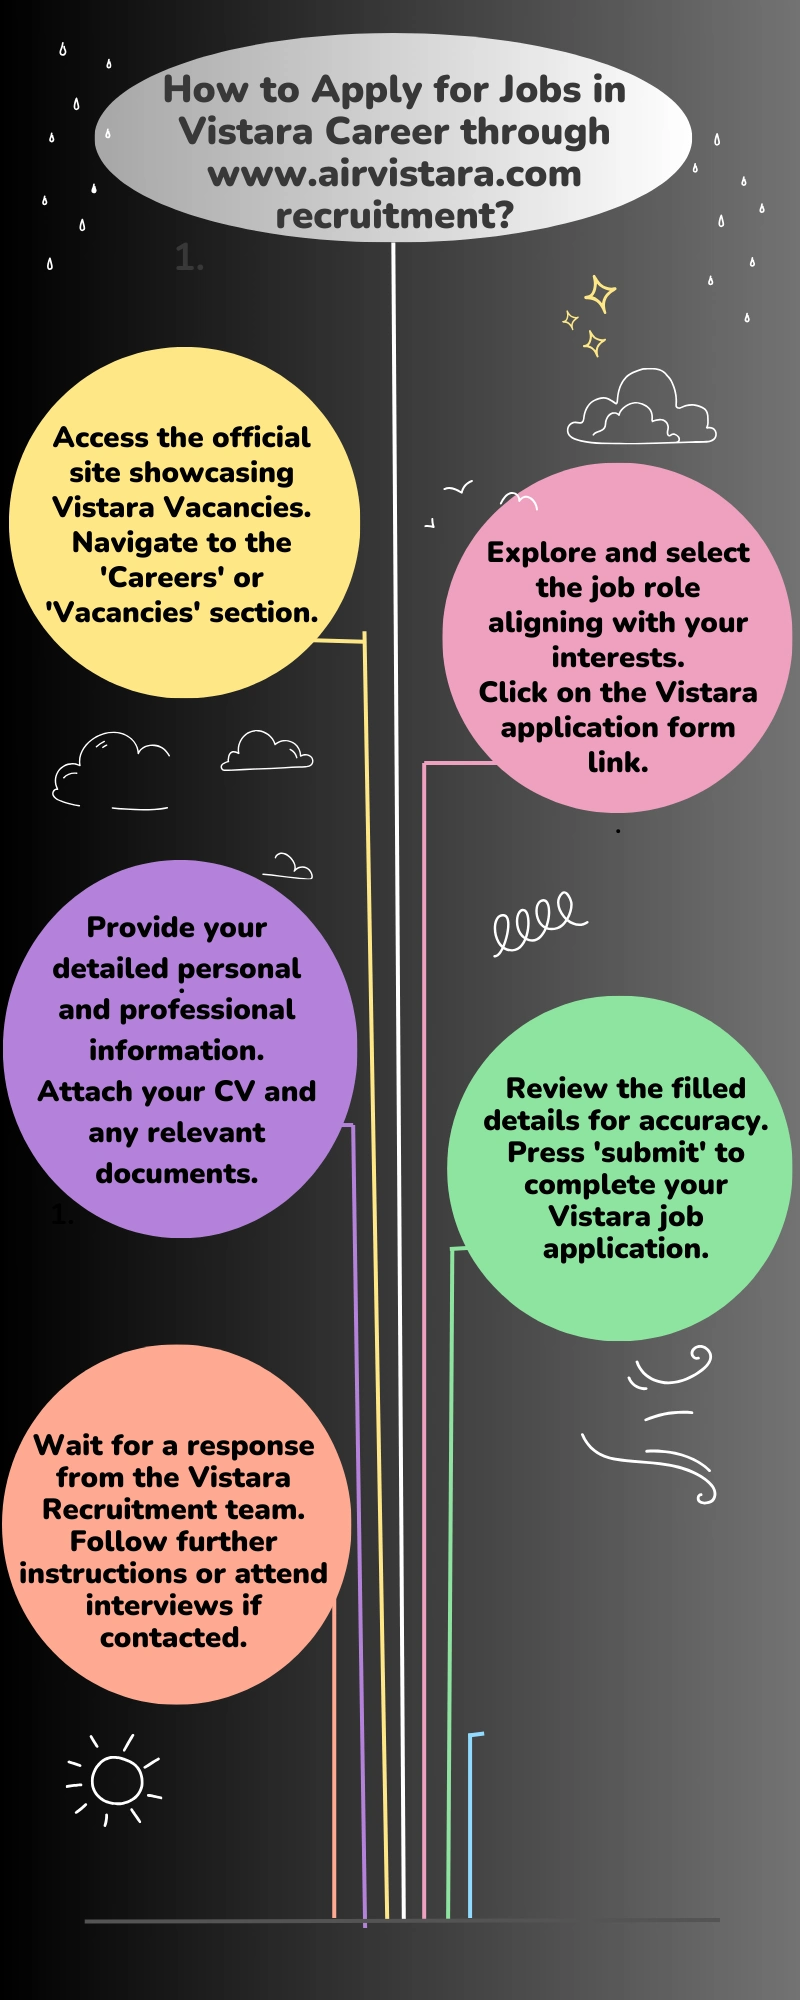 How to Apply for Jobs in Vistara Career through www.airvistara.com recruitment_